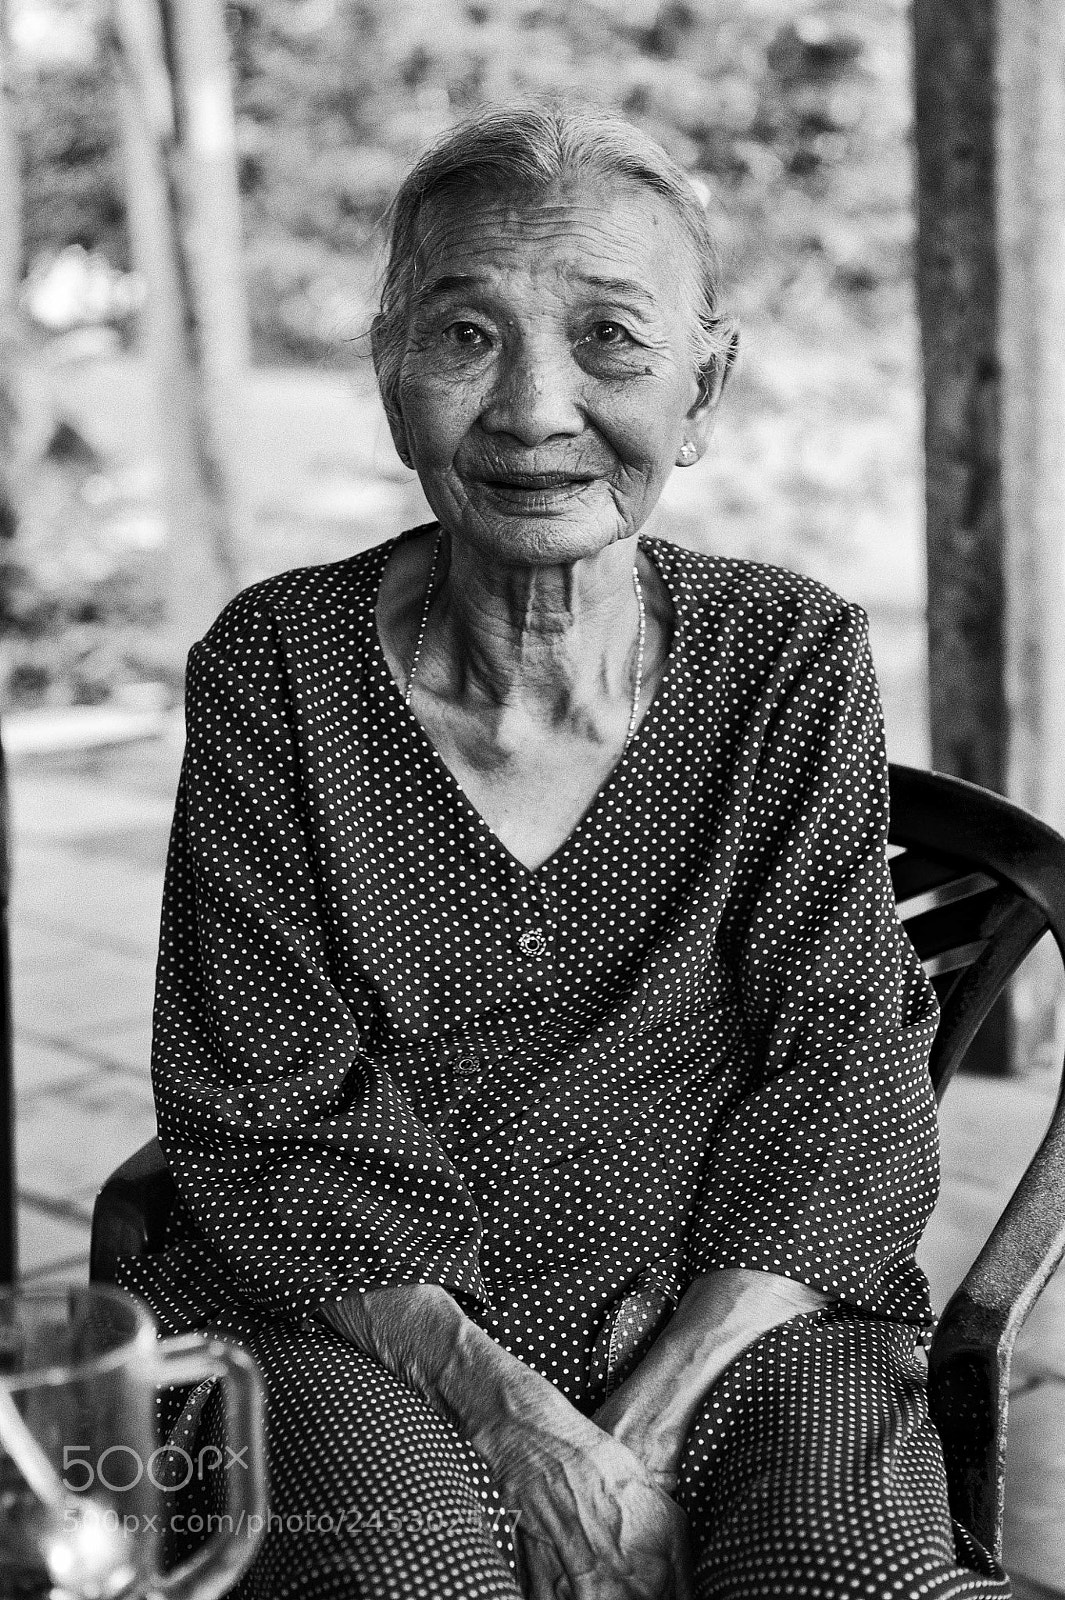 Nikon D700 sample photo. Ben tre, vietnam 2017 photography